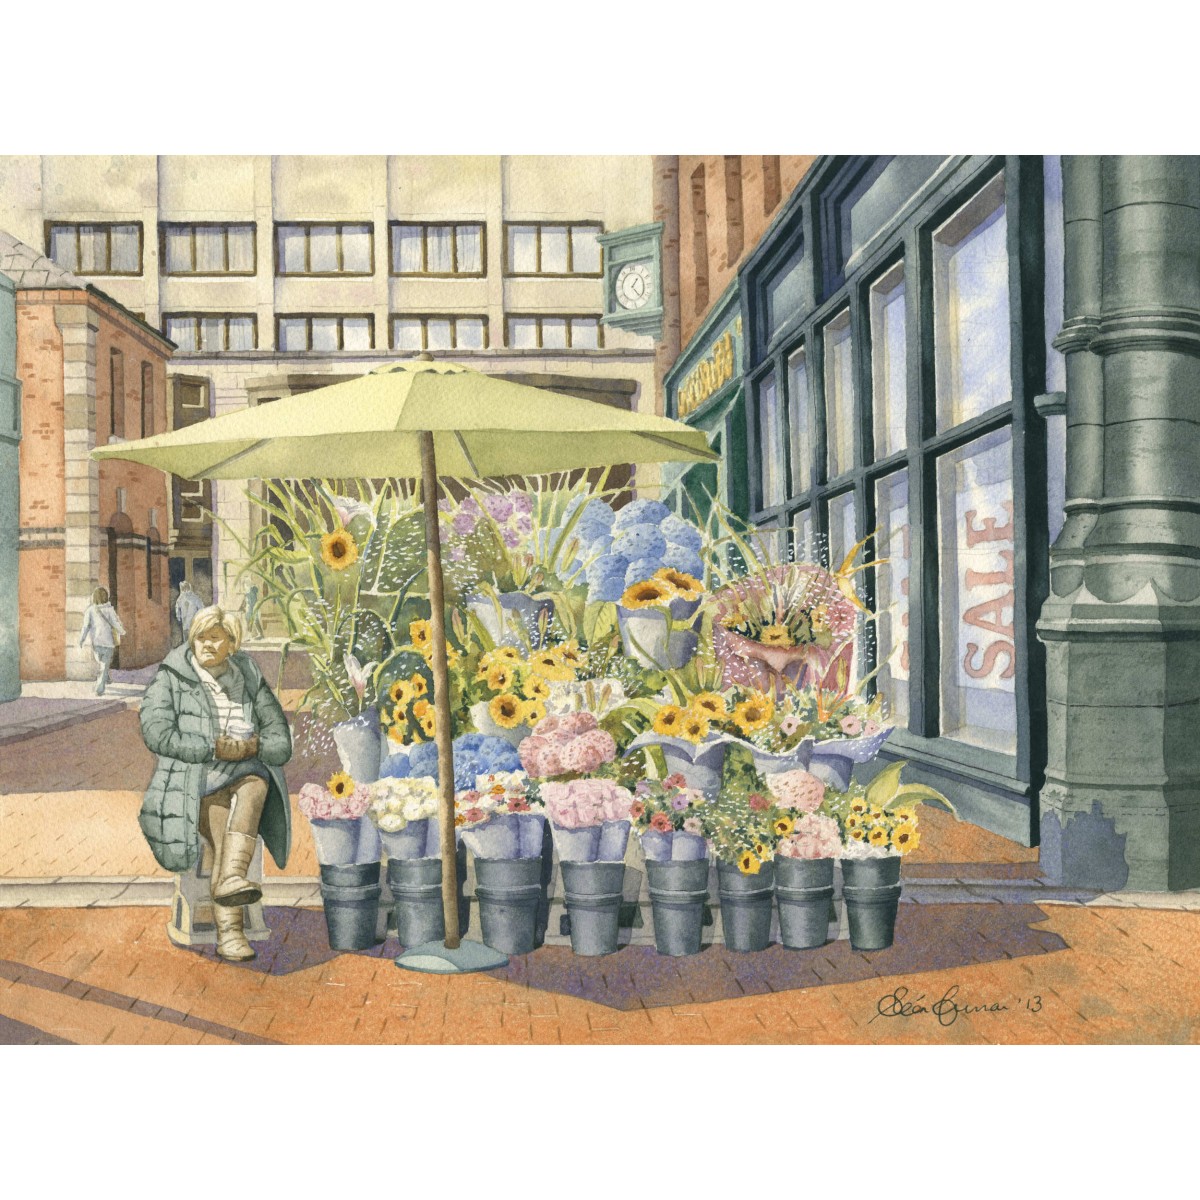 "The Flowers Sellers, Grafton Street, Dublin"